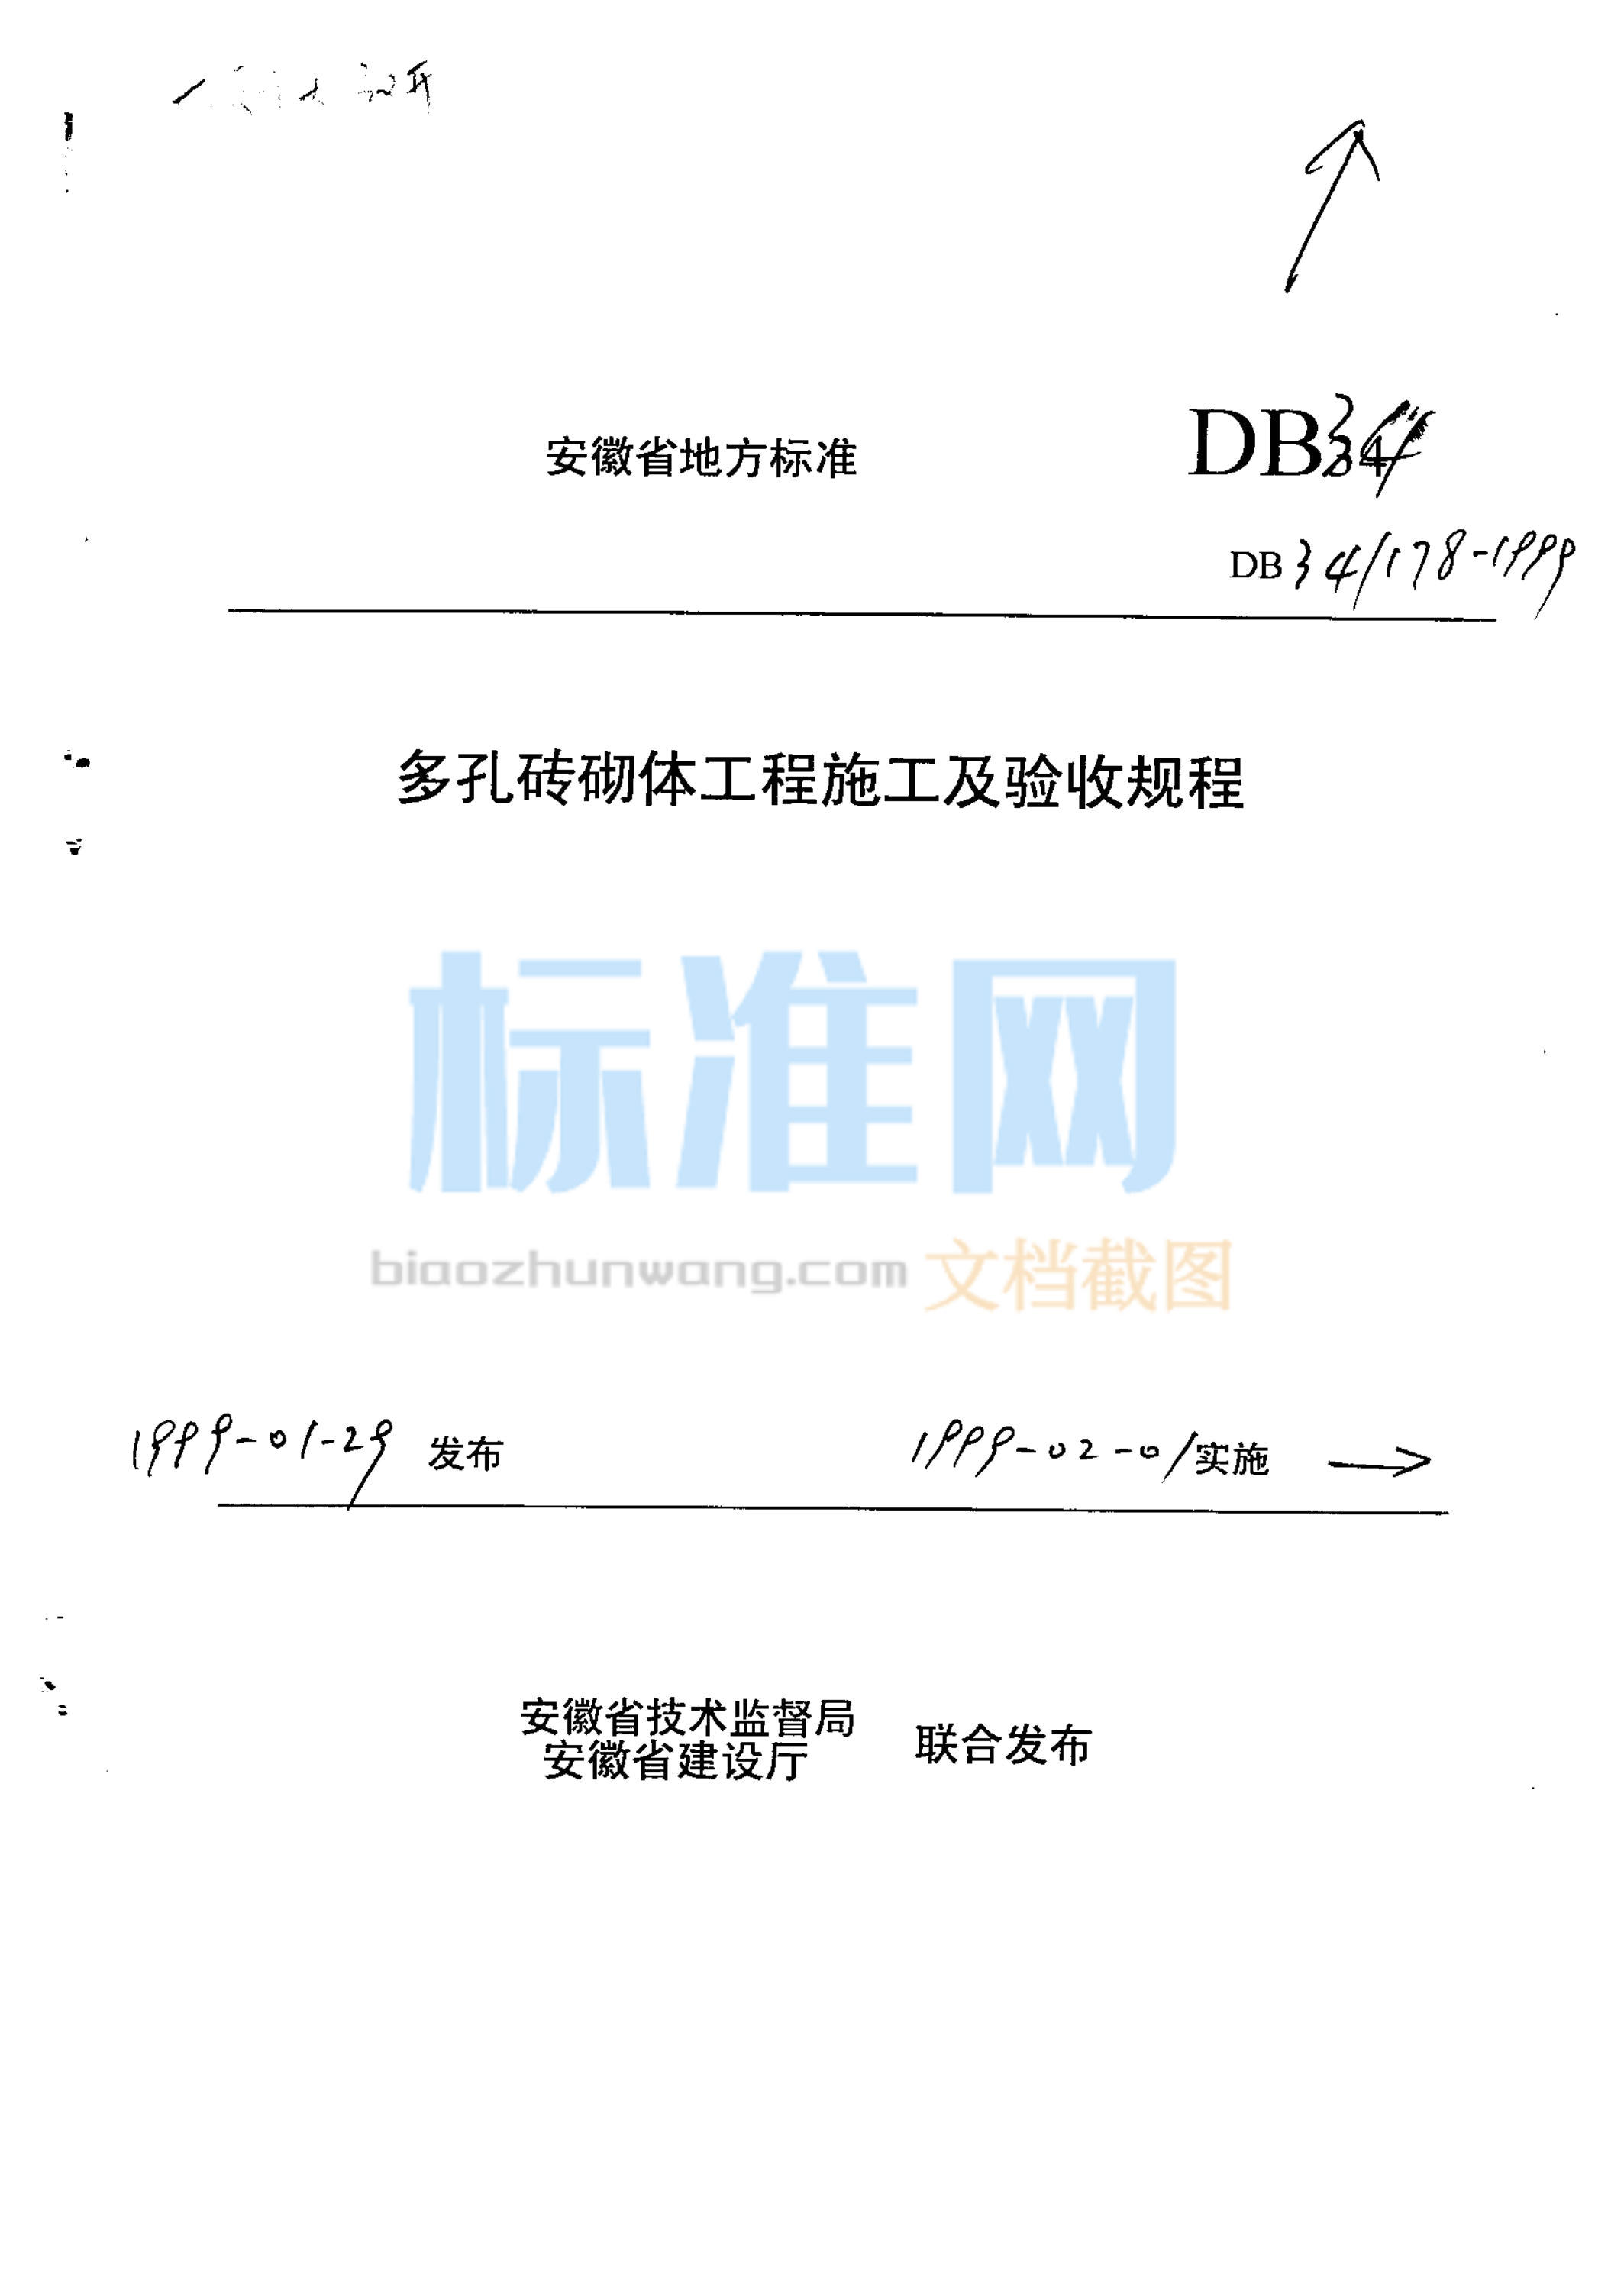 DB34/178-1999 多孔砖砌体工程施工及验收规程